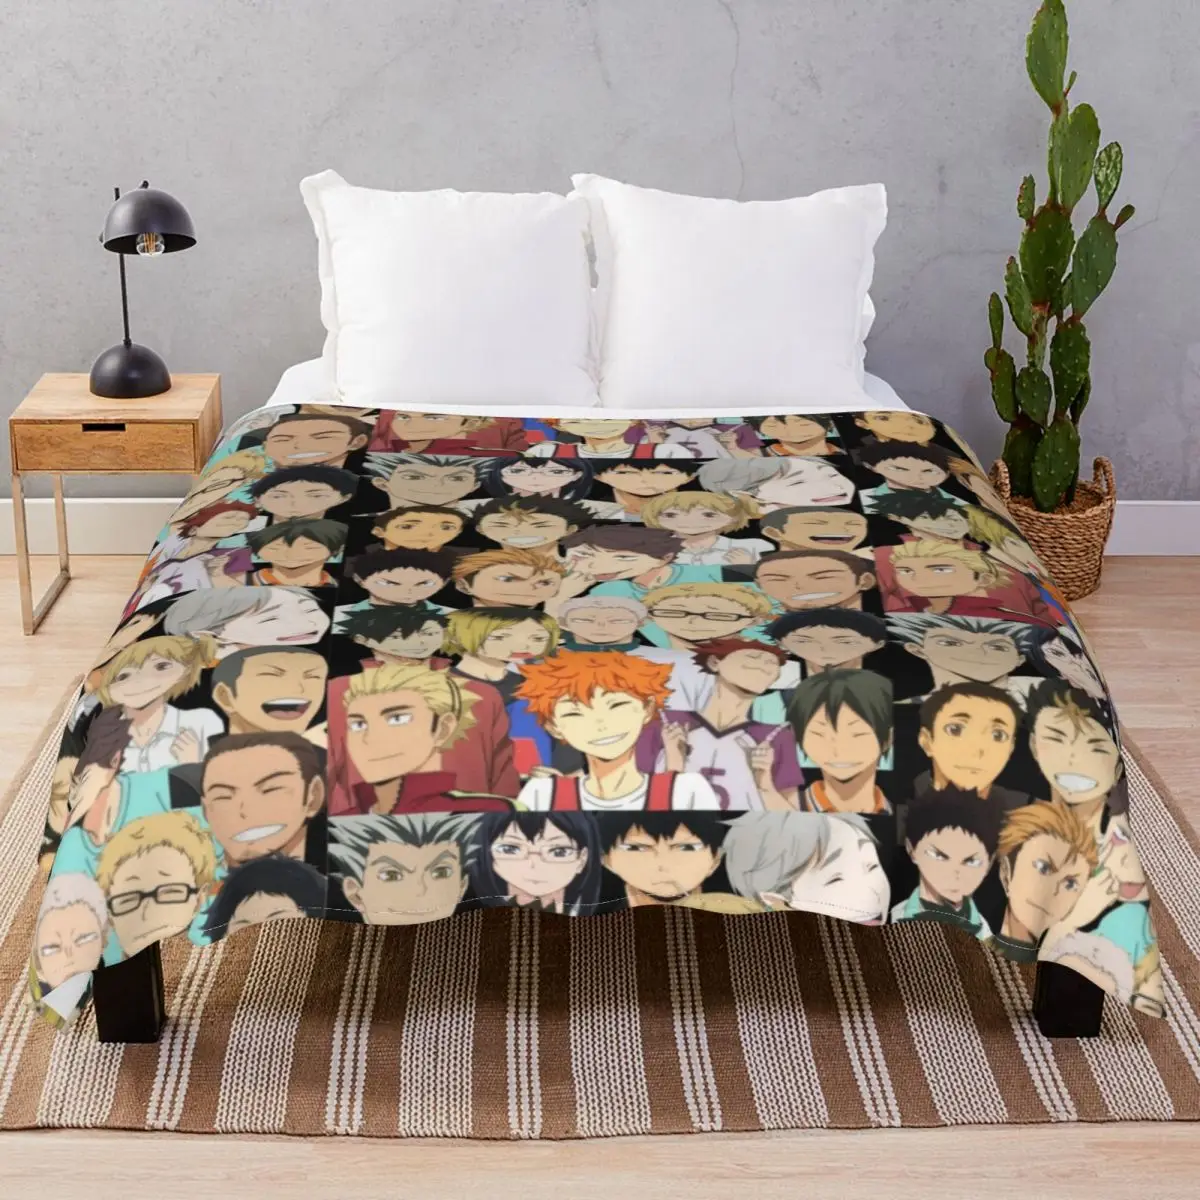 Haikyuu Blankets Coral Fleece Printed Lightweight Thin Throw Blanket for Bedding Sofa Travel Cinema